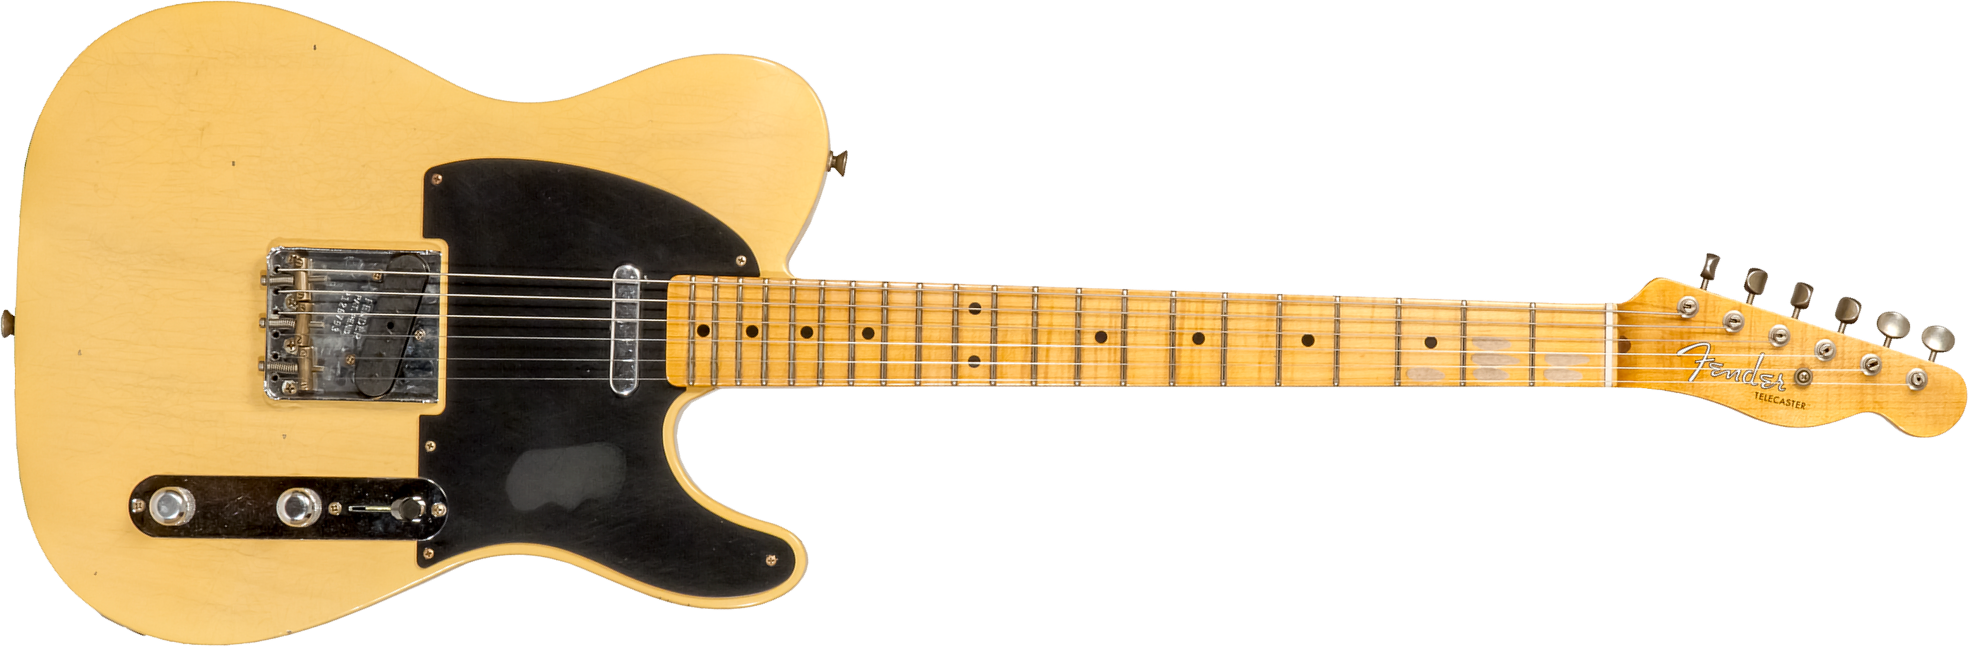 Fender Custom Shop Tele 1953 2s Ht Mn #r126793 - Journeyman Relic Aged Nocaster Blonde - Tel shape electric guitar - Main picture